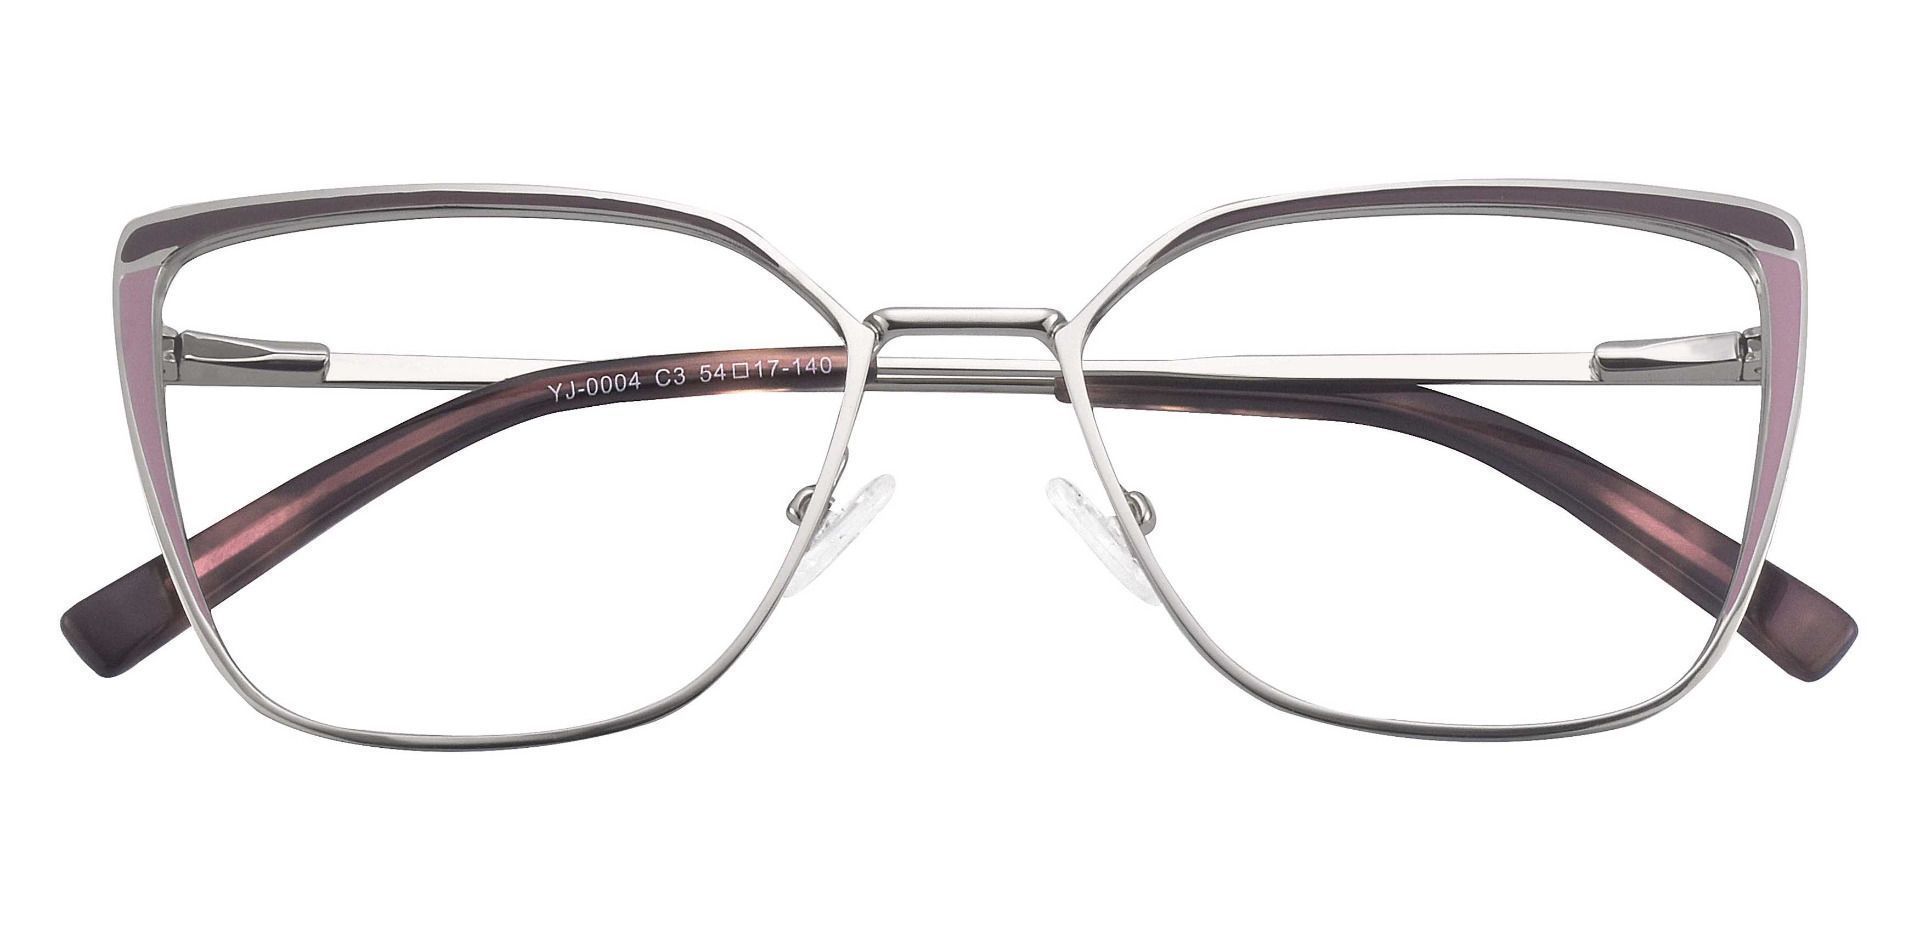 Hale Geometric Prescription Glasses - Pink | Women's Eyeglasses | Payne ...